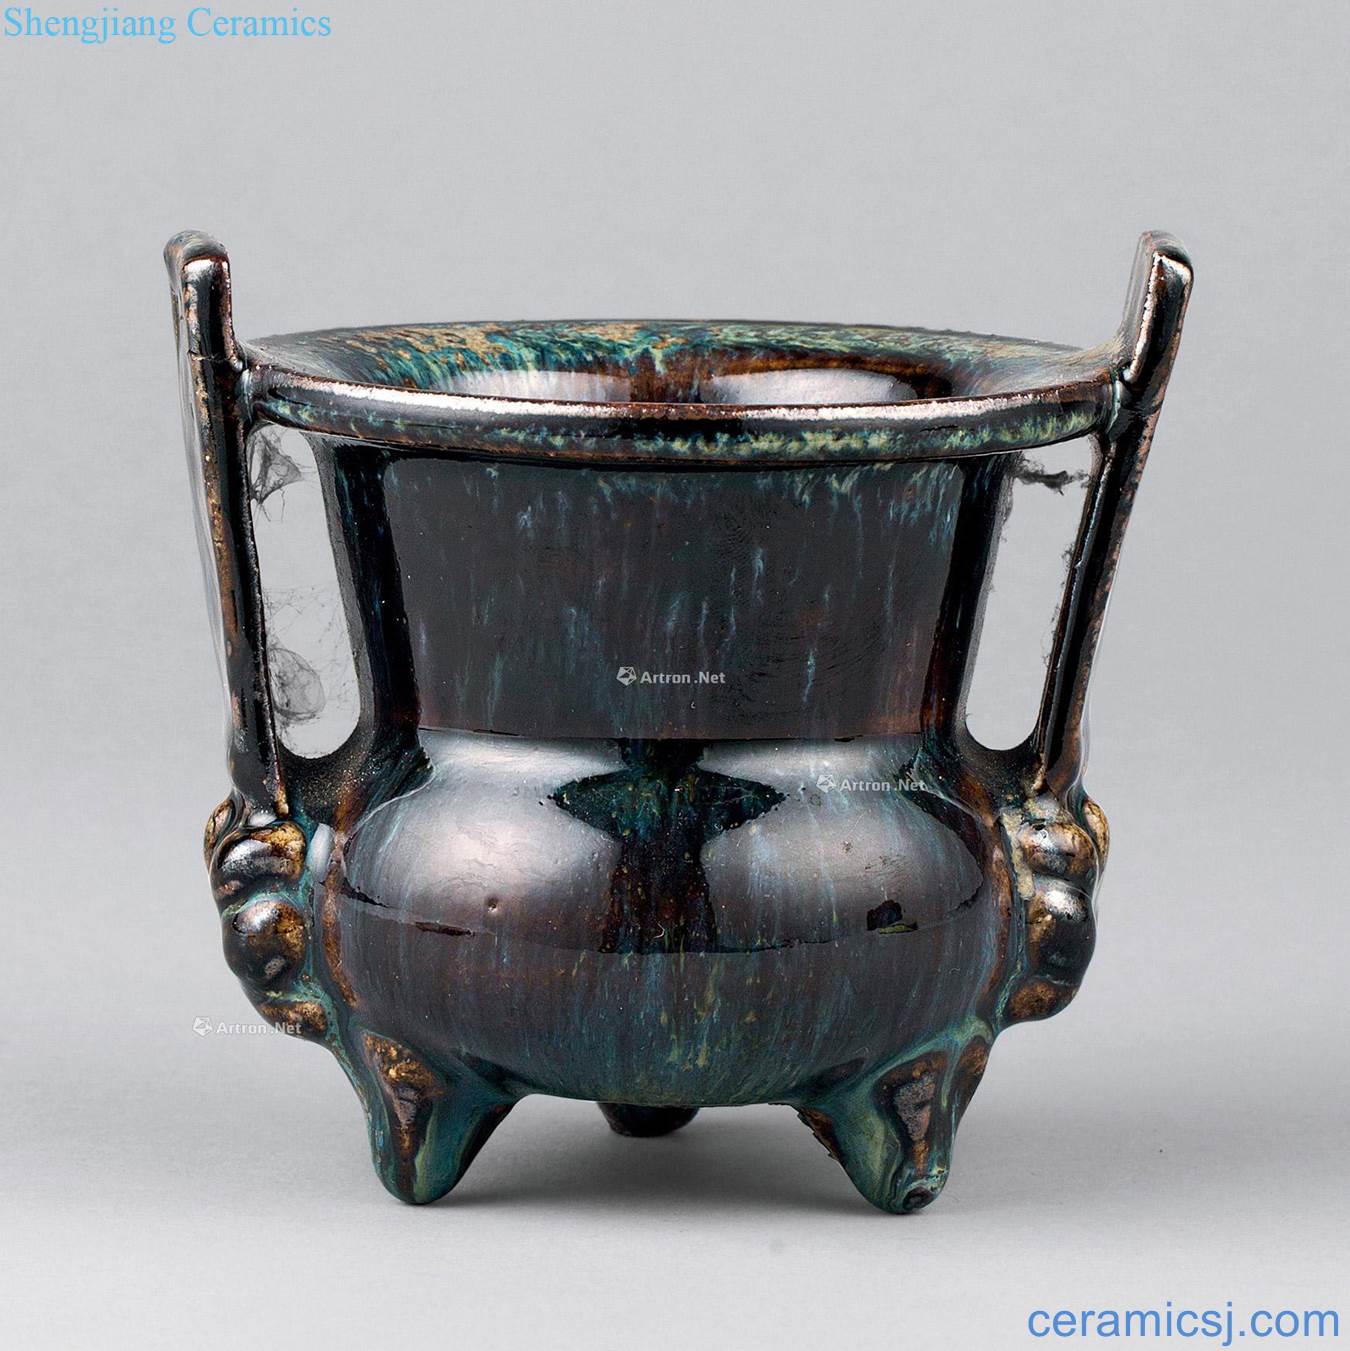 The yuan dynasty (1279-1368) variable glaze ears incense burner